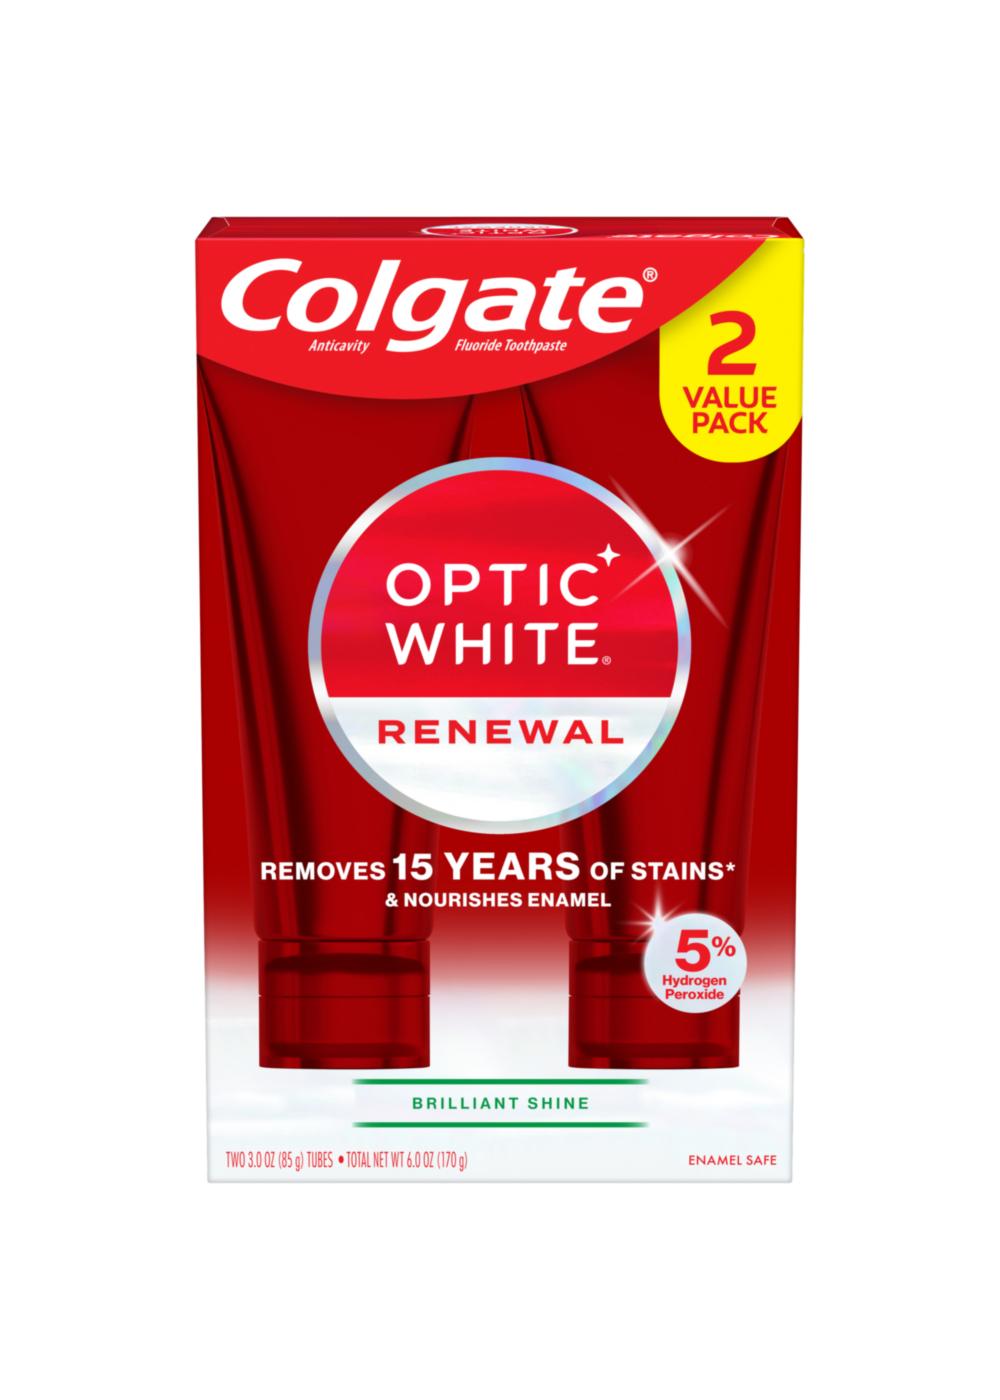 Colgate Optic White Renewal Toothpaste - Brilliant Shine; image 1 of 2